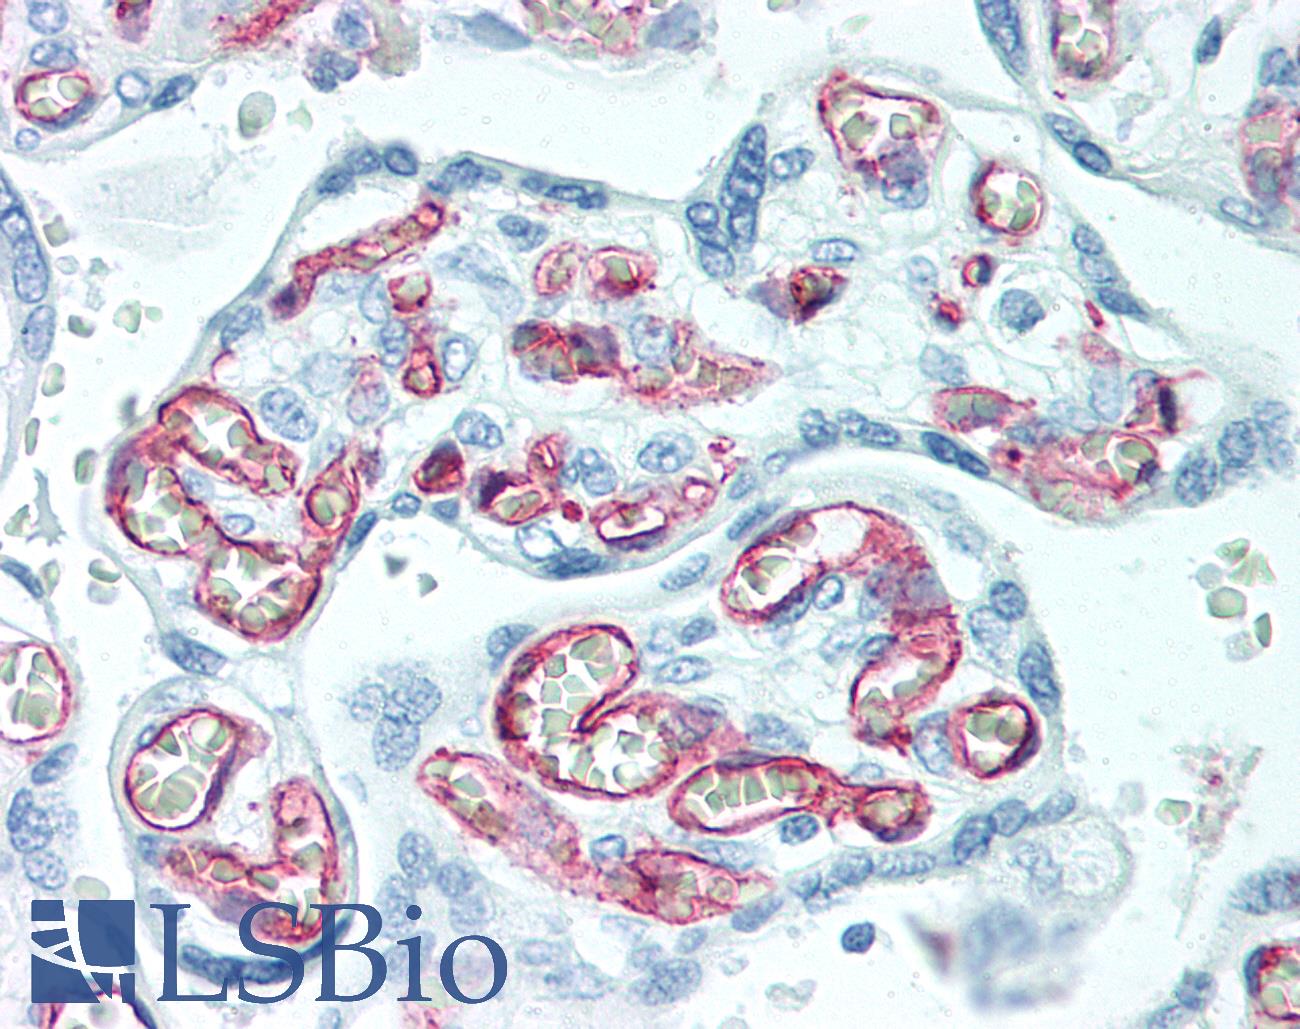 PECAM-1 / CD31 Antibody - Human Placenta: Formalin-Fixed, Paraffin-Embedded (FFPE)